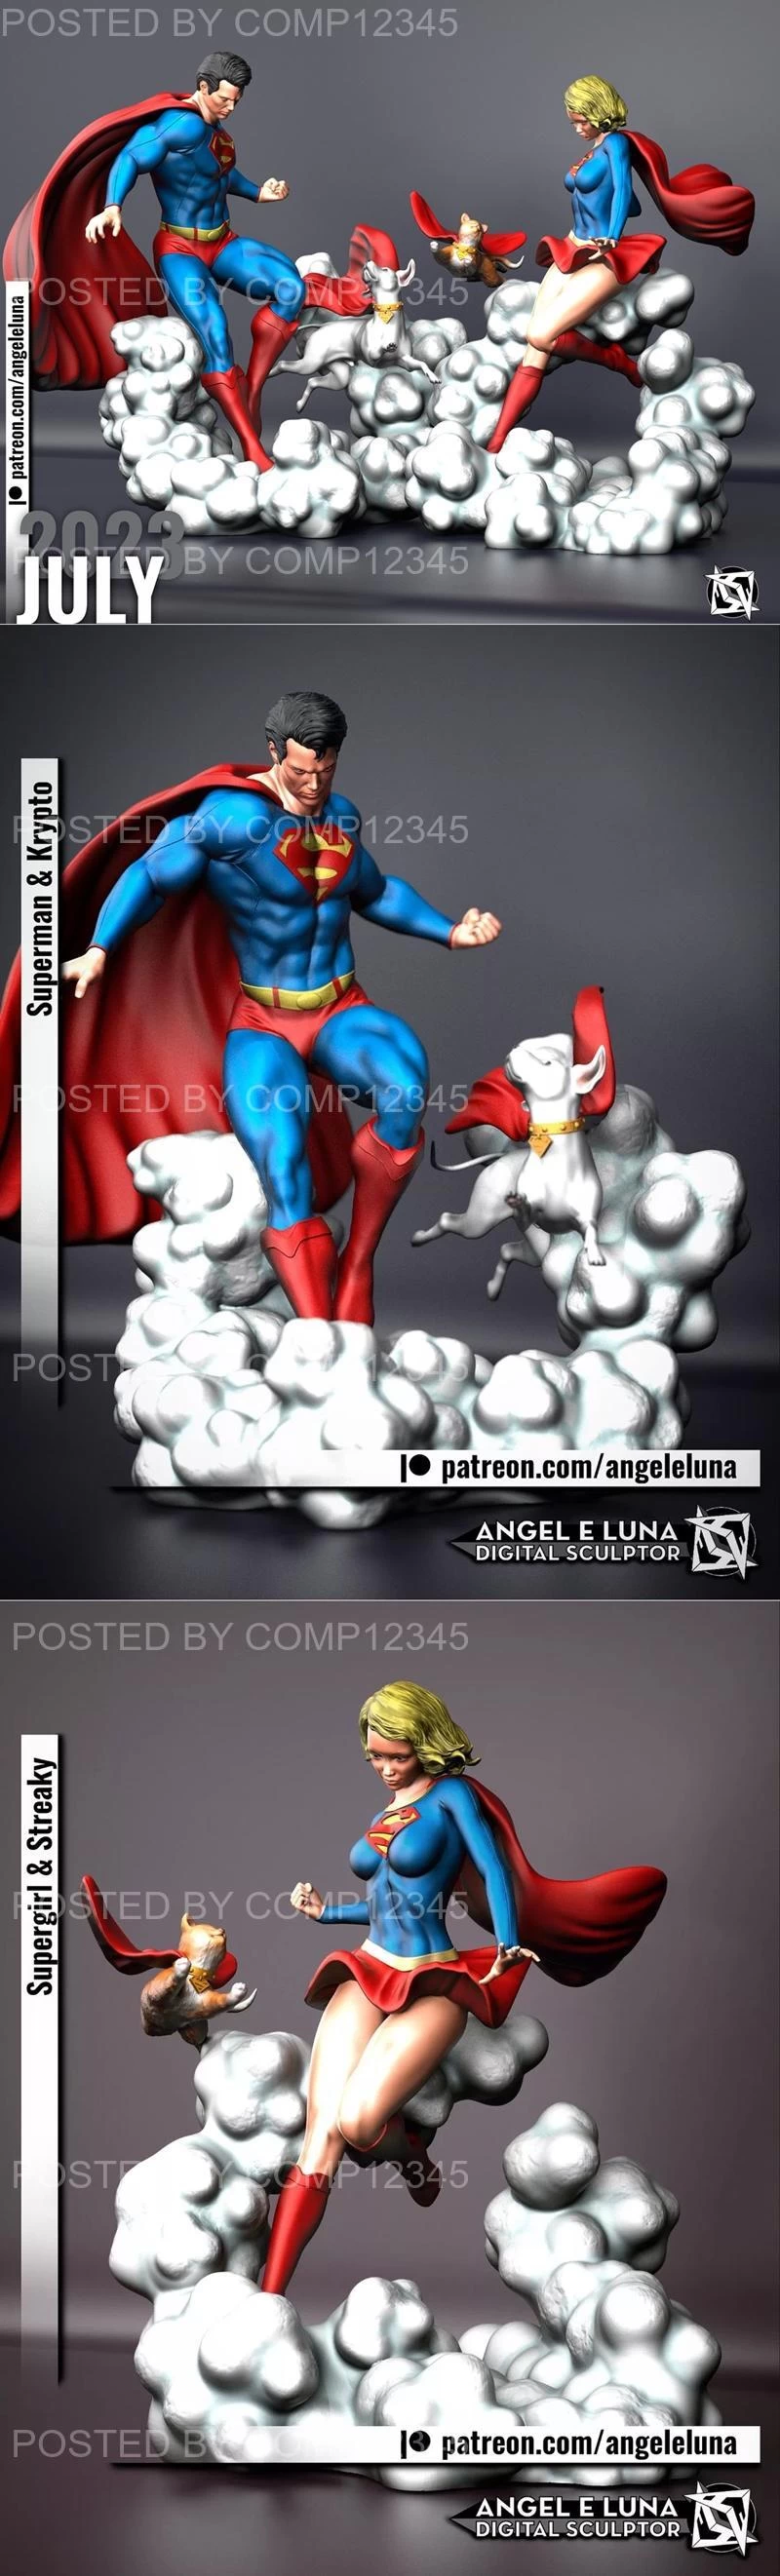 3D Print Model - Angel e luna - Superman And Supergirl